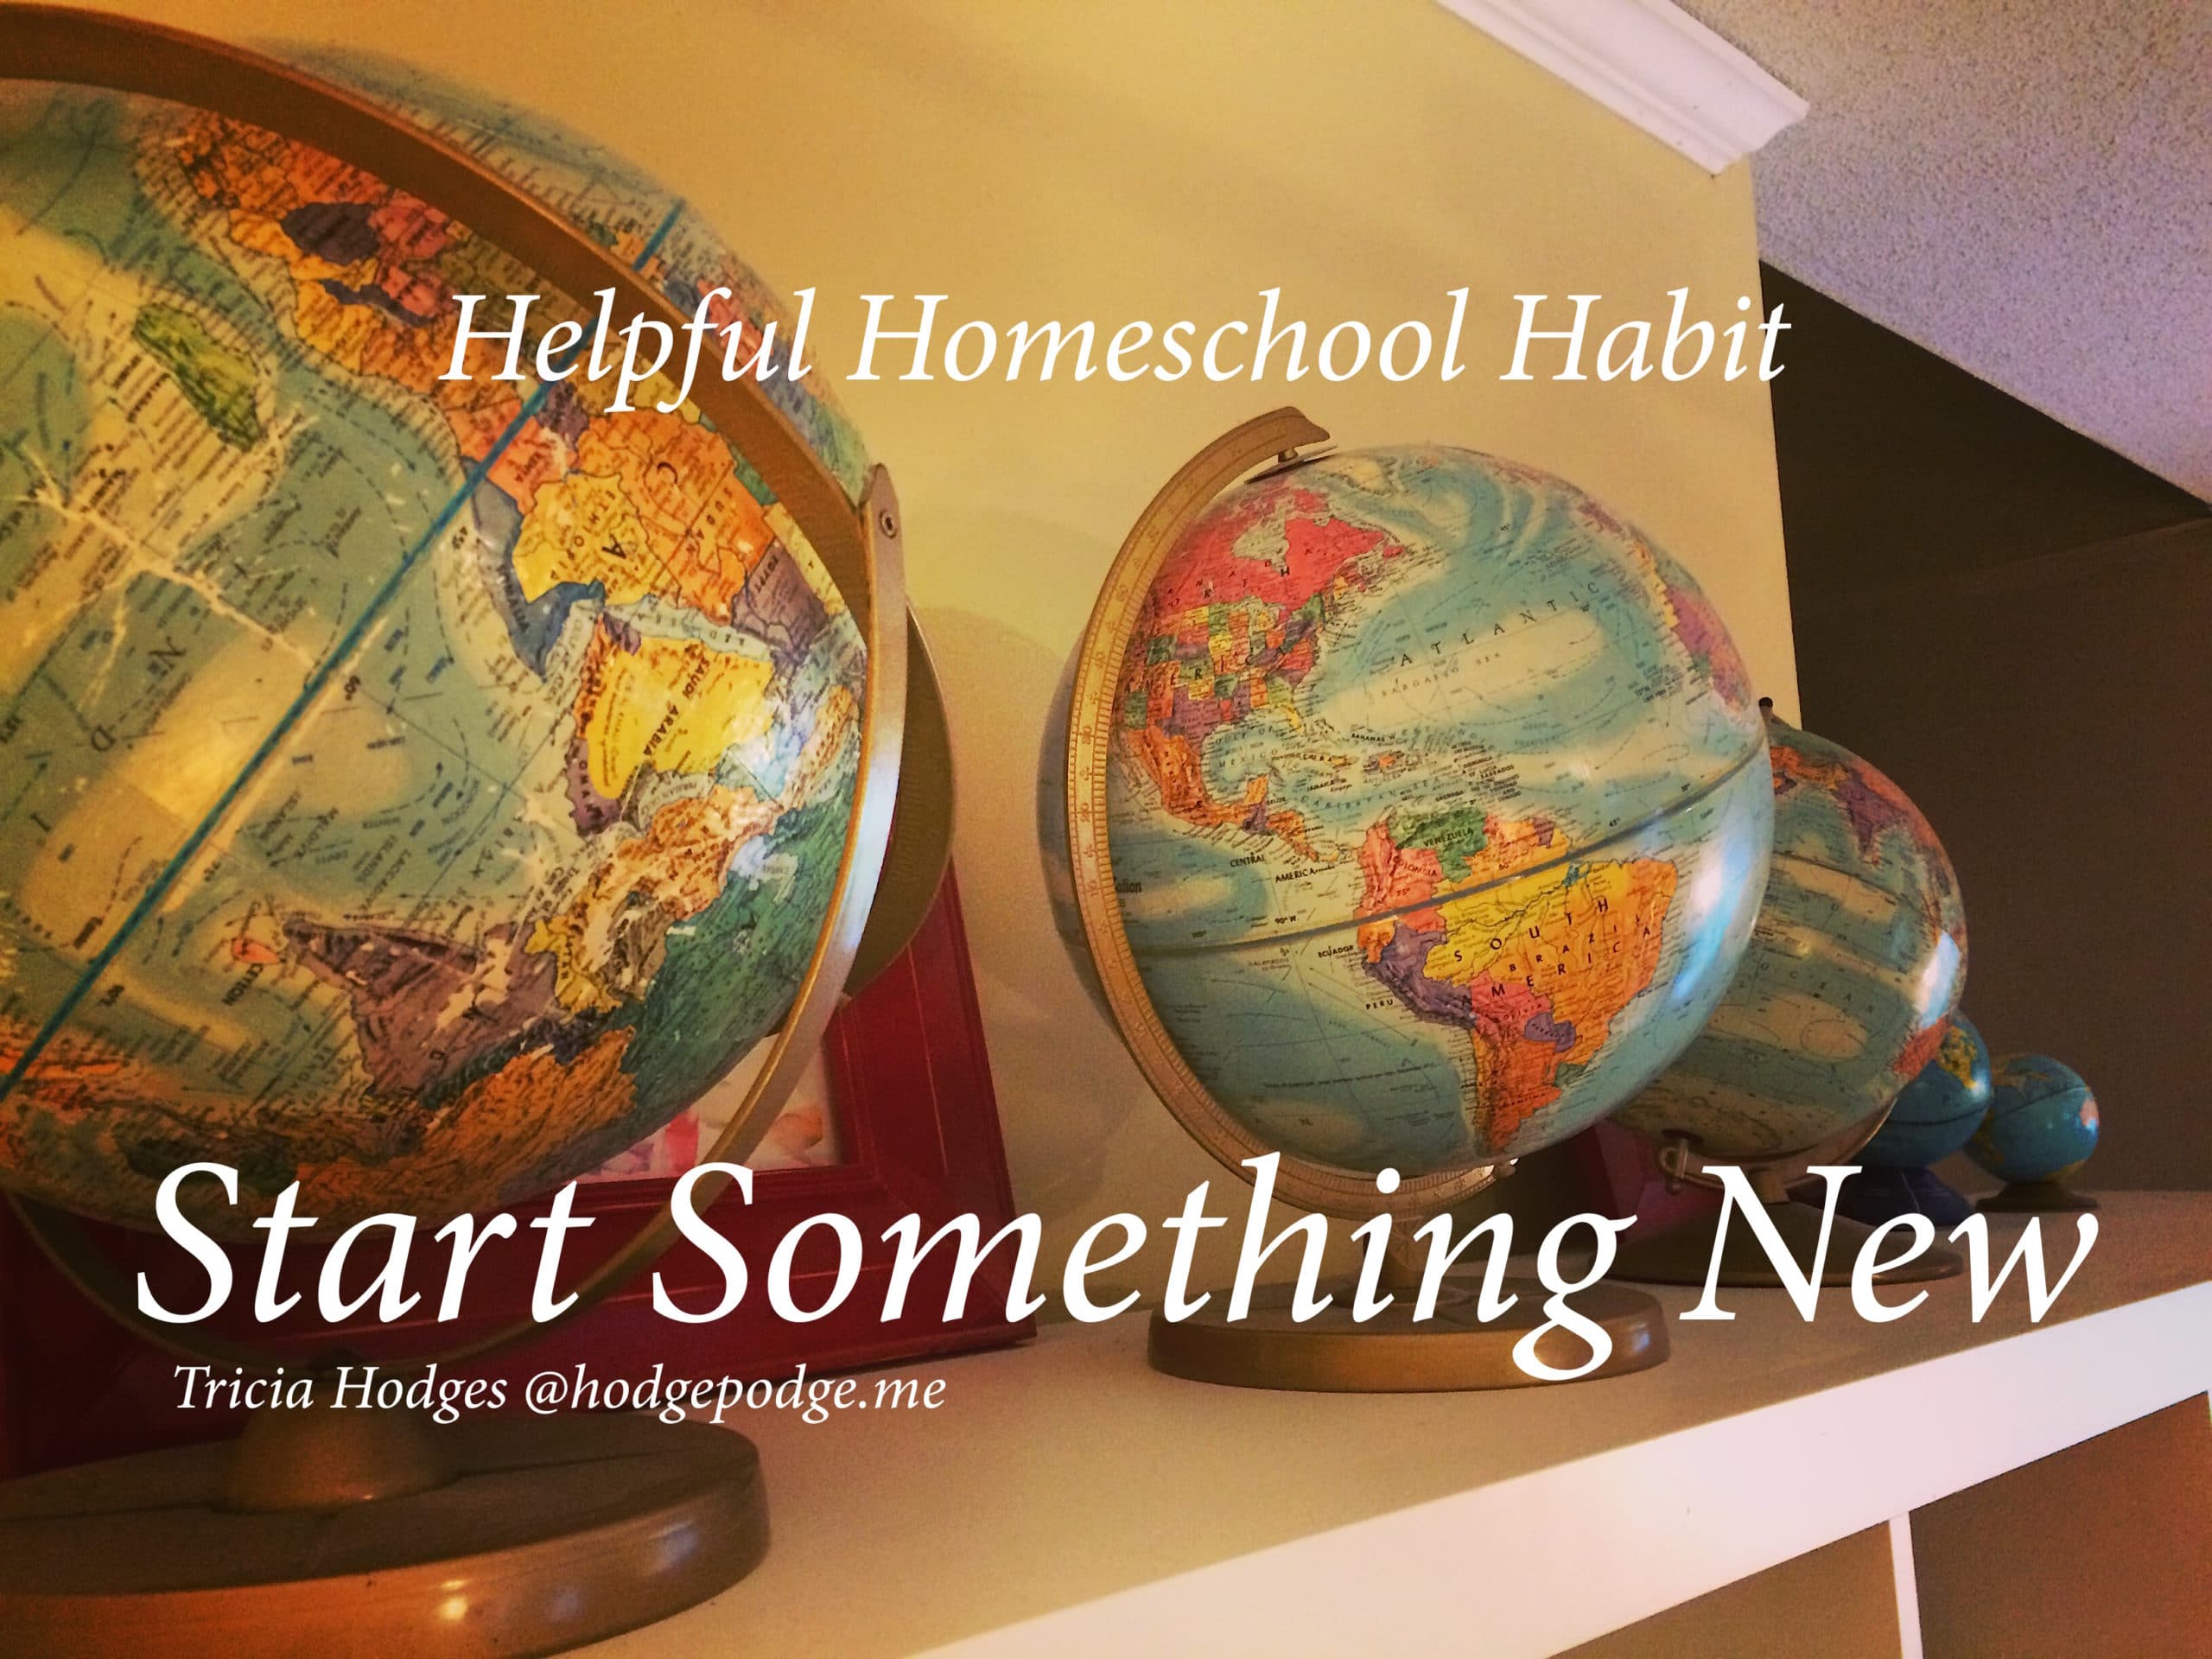 Helpful Homeschool Habit: Start Something New